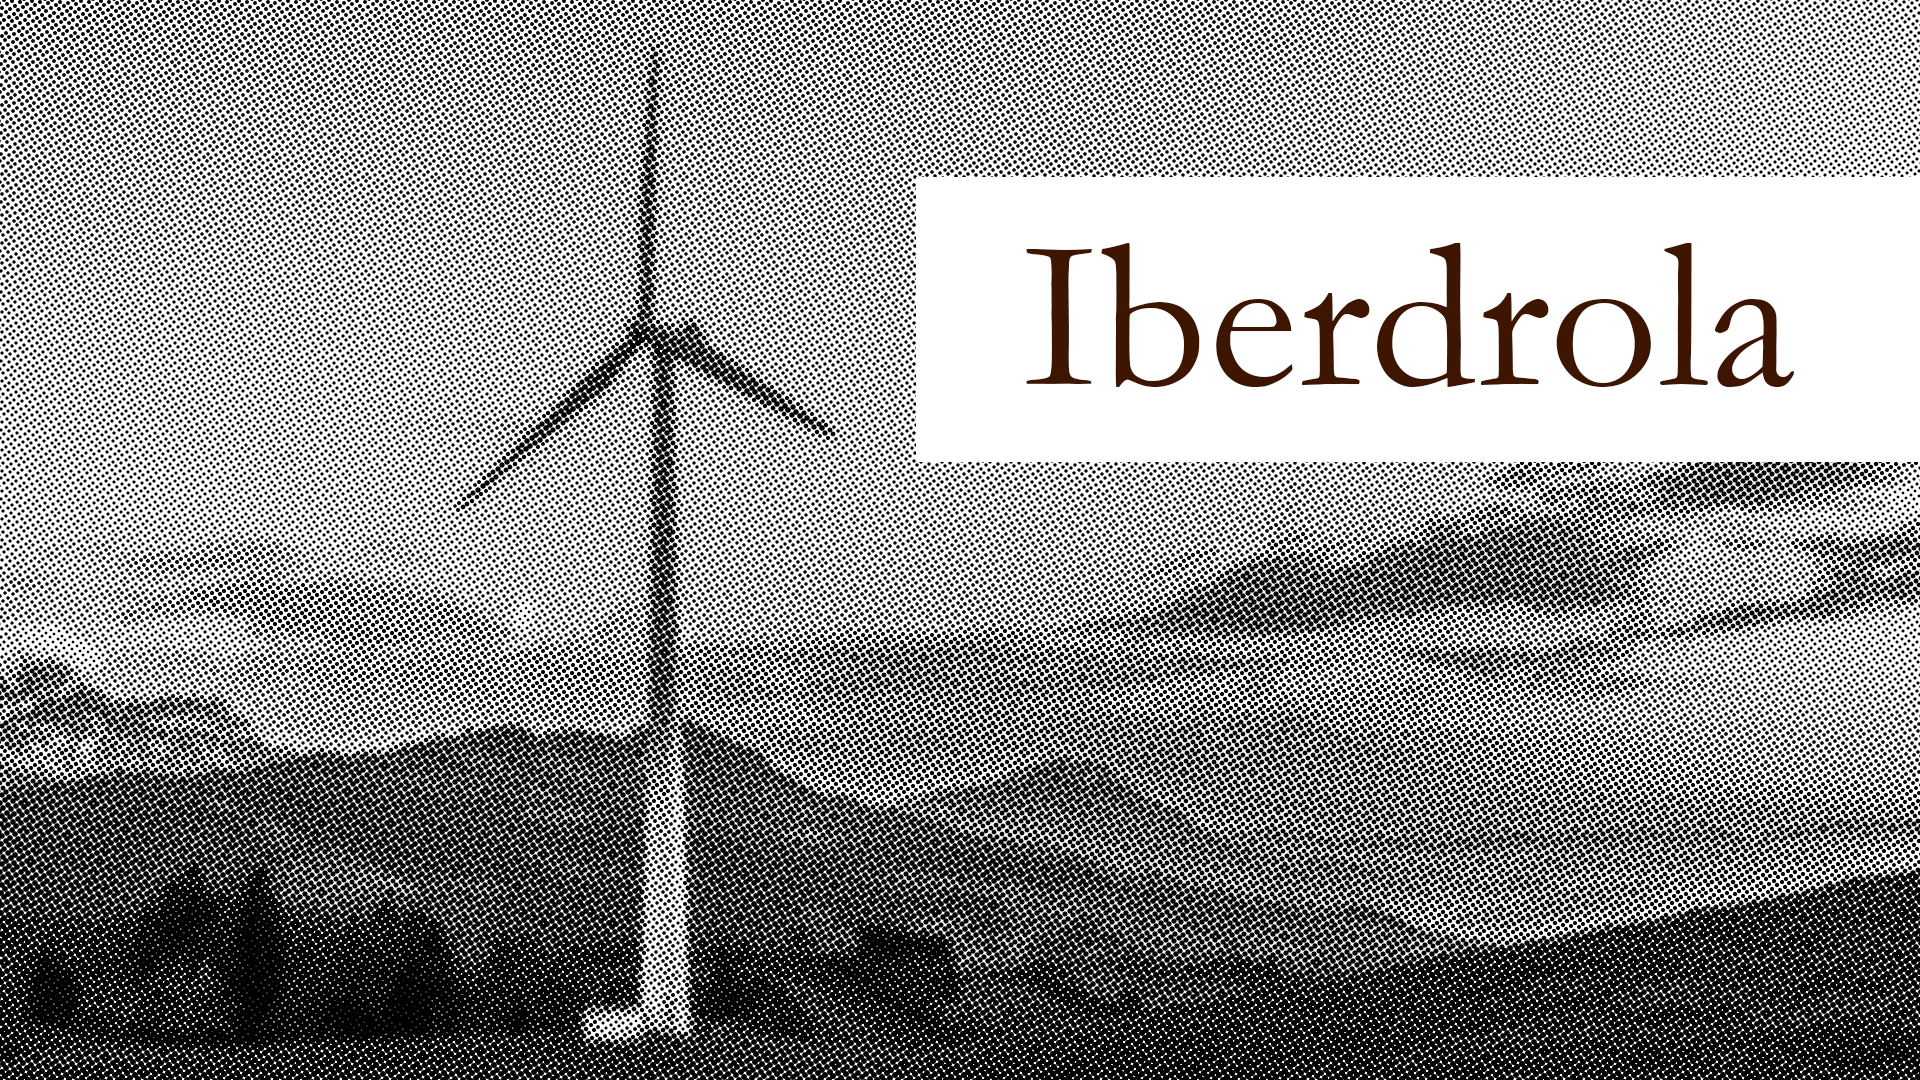 Saubere Energie aus Iberien: Iberdrola